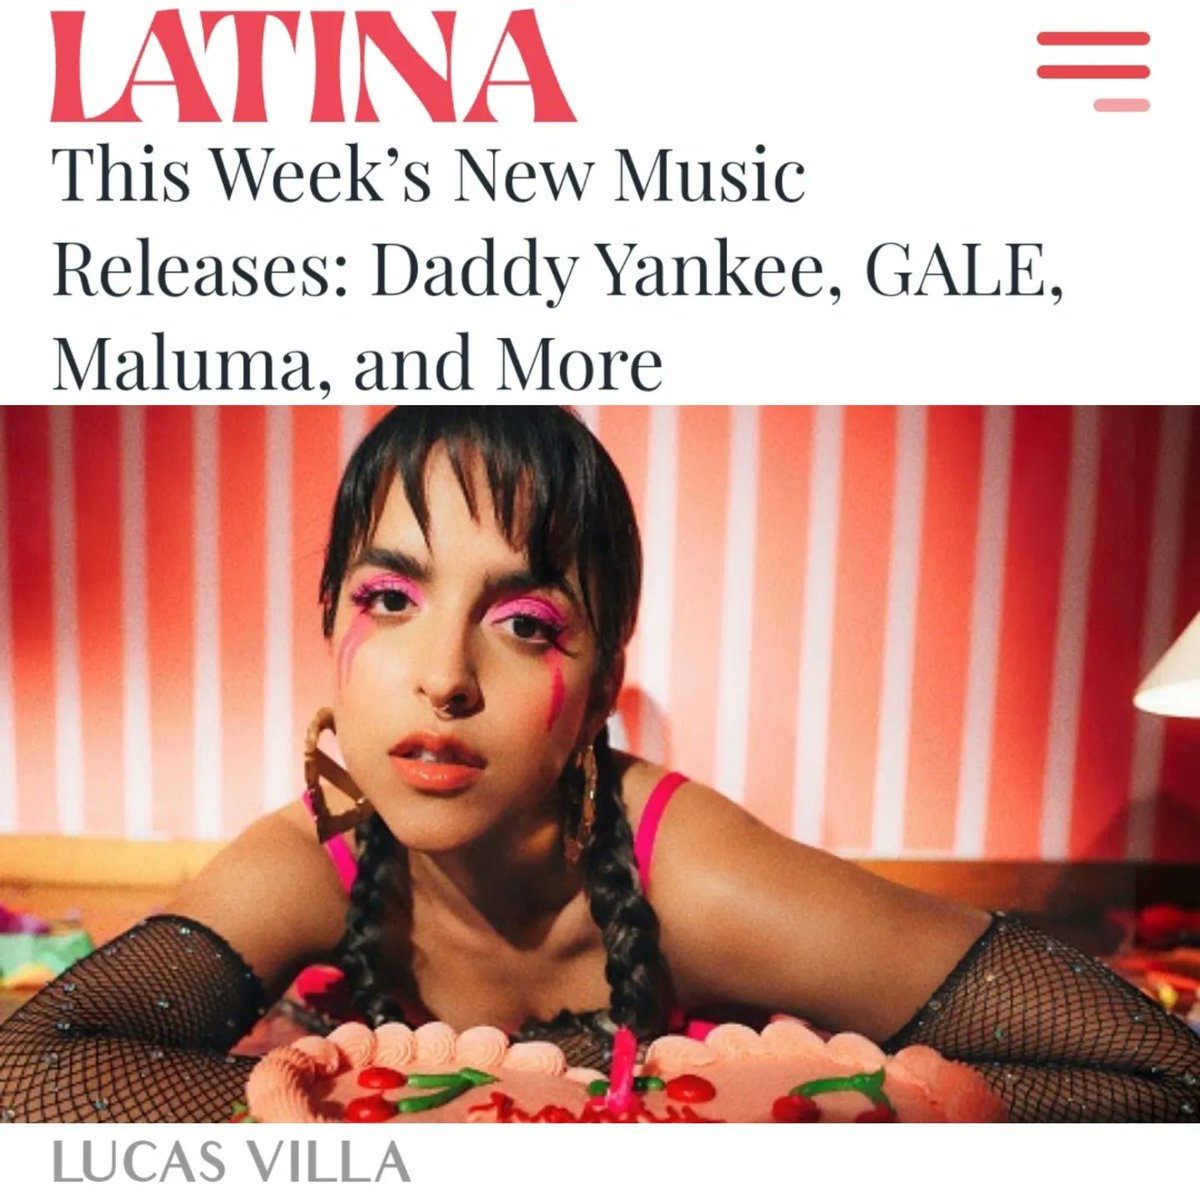 For last week's @latina new music picks, I interviewed rising stars @gale_oficial & @veronique956 + the @daddy_yankee & bad bunny dream collab, @sebastianyatra, @maluma, @villanomalandro + more 🎧 latina.com/this-weeks-new…